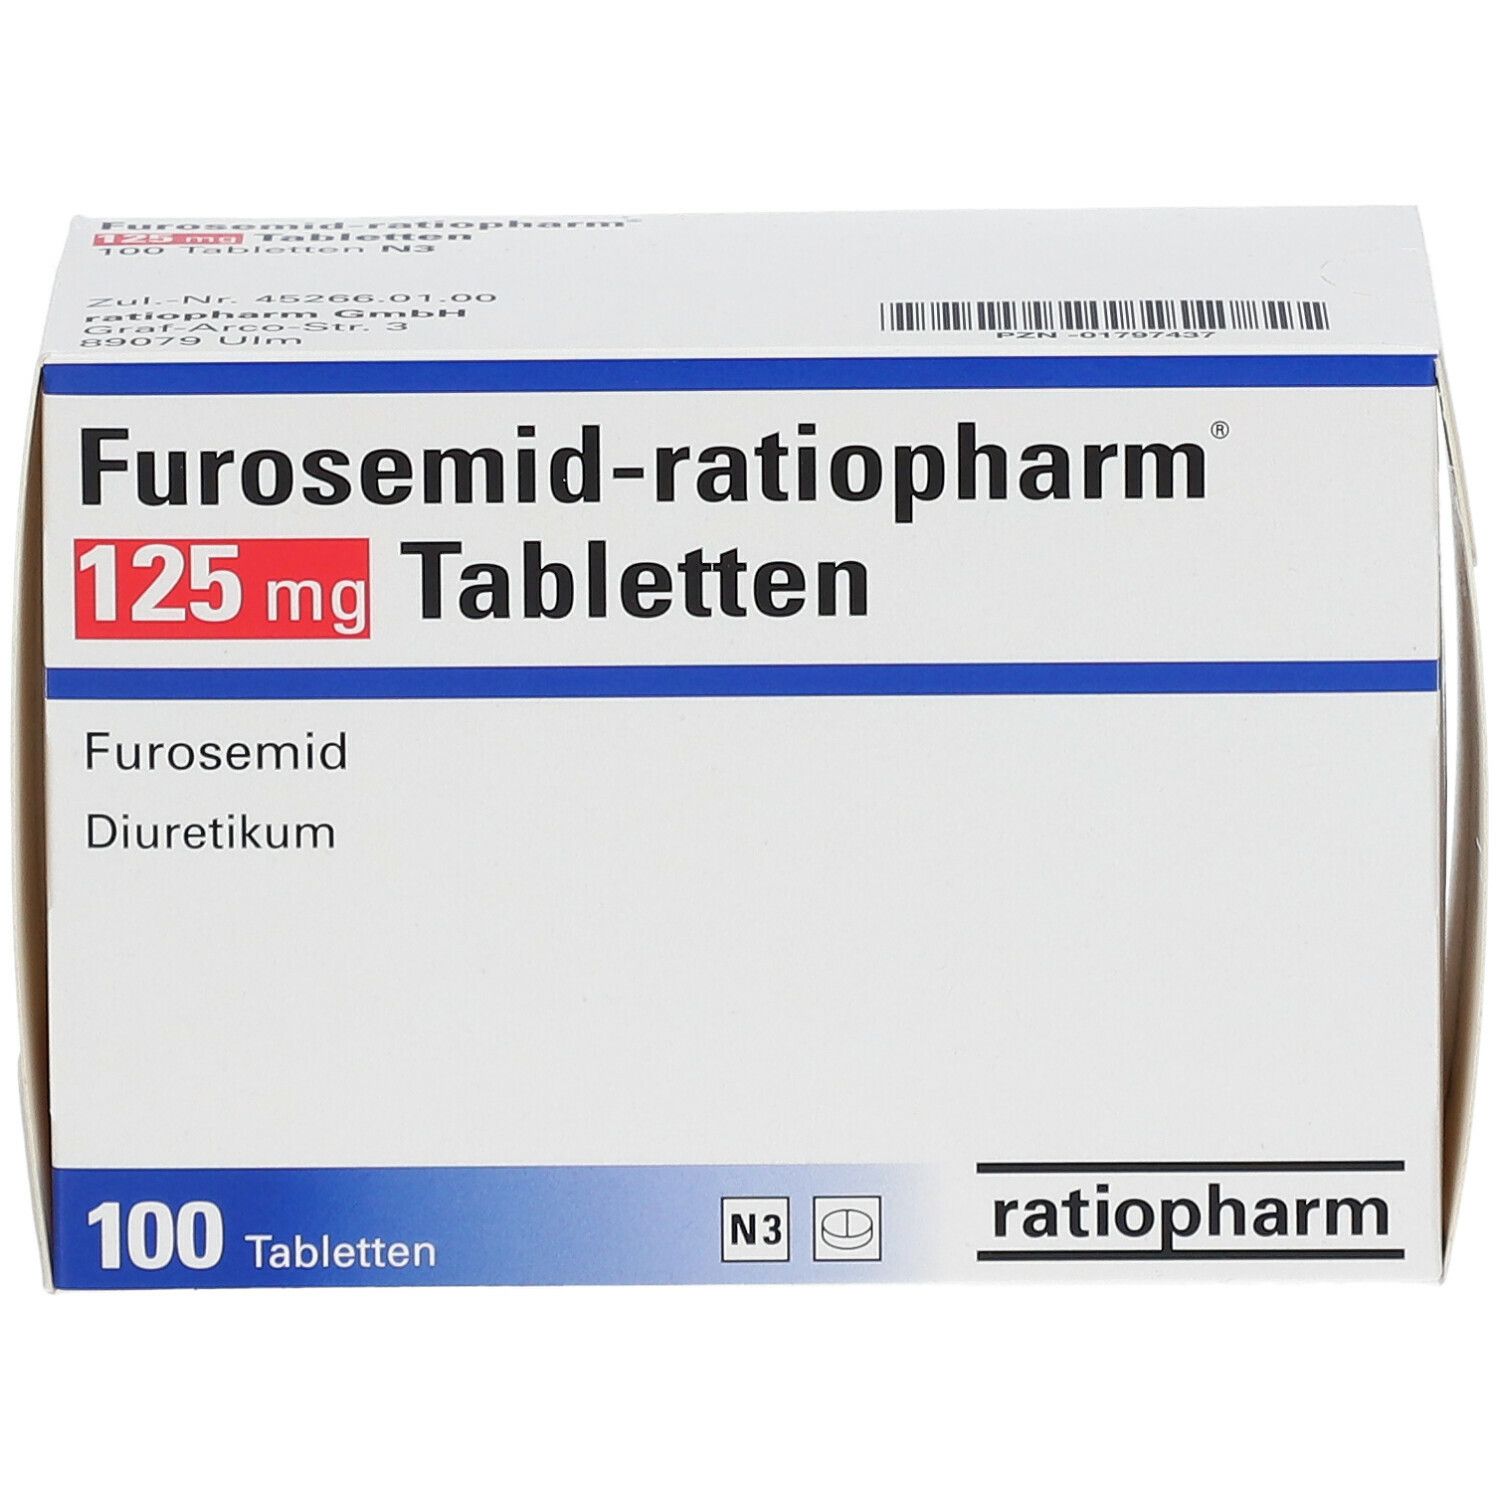 Furosemid-ratiopharm® 125 mg